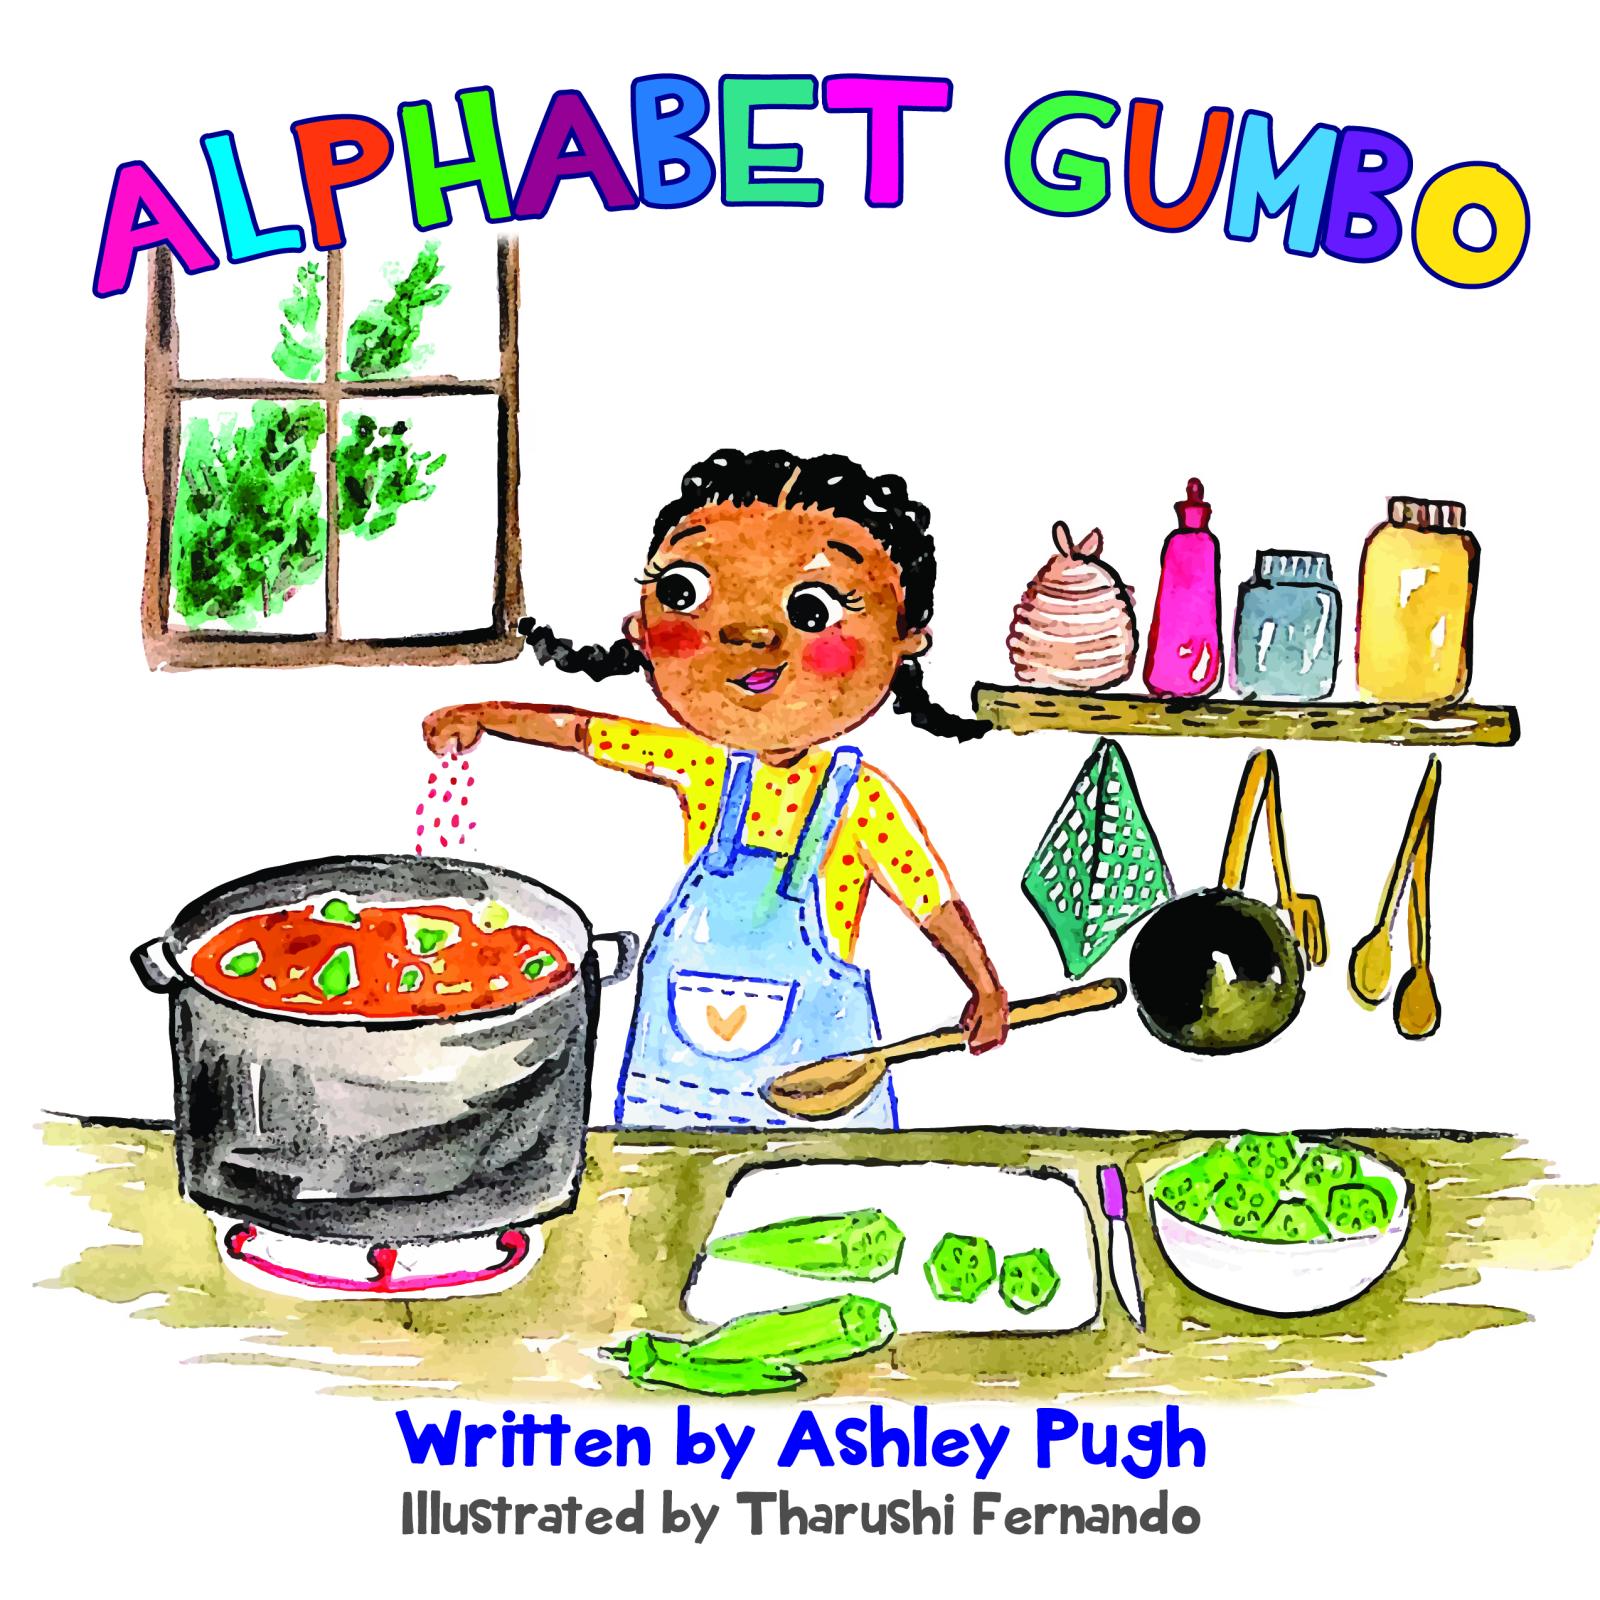 Alphabet gumbo book cover